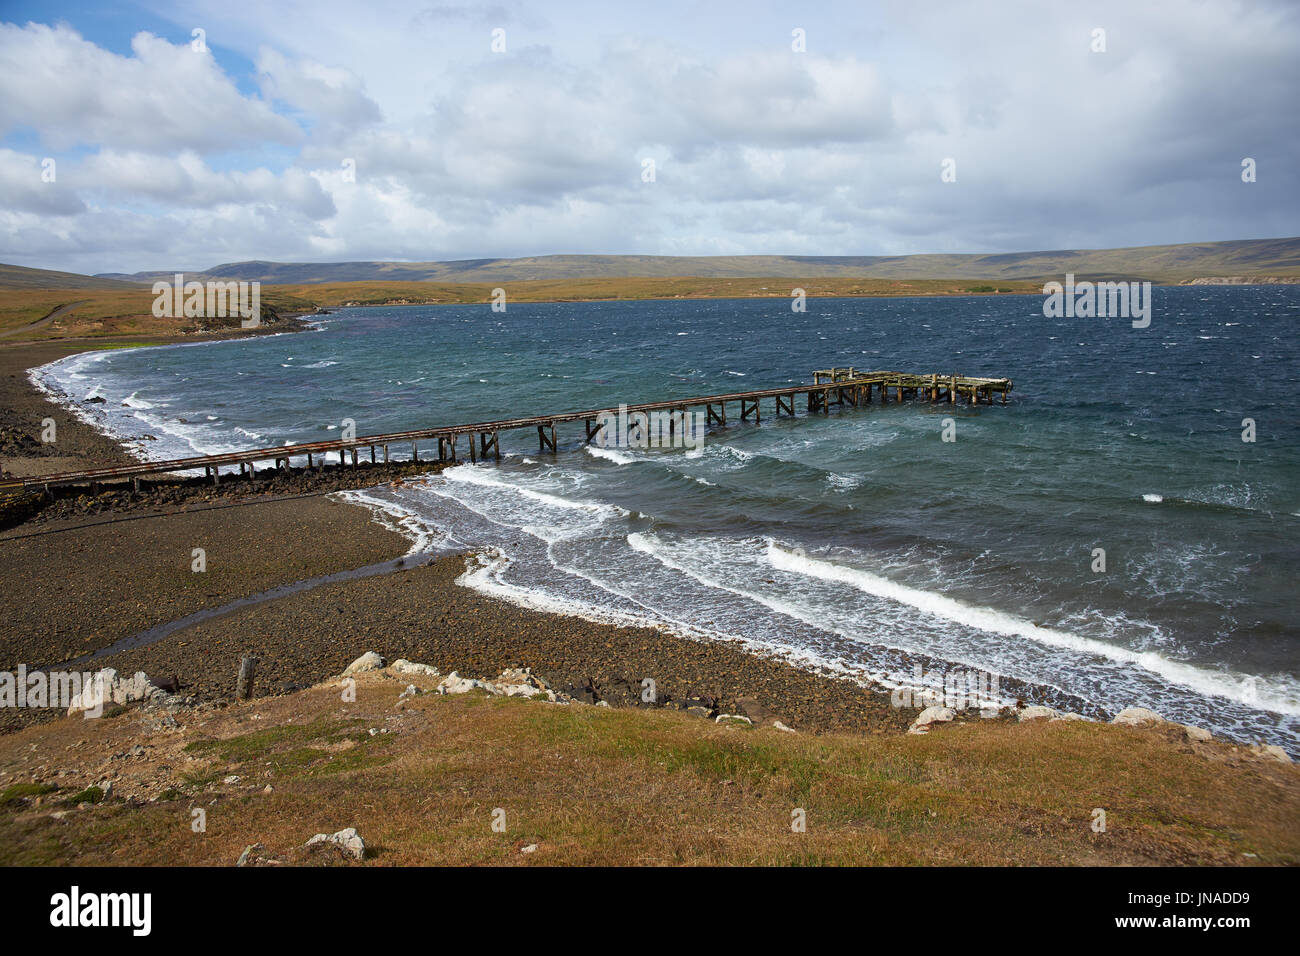 Jetty at Port San Carlos on the Falkland Islands Stock Photo